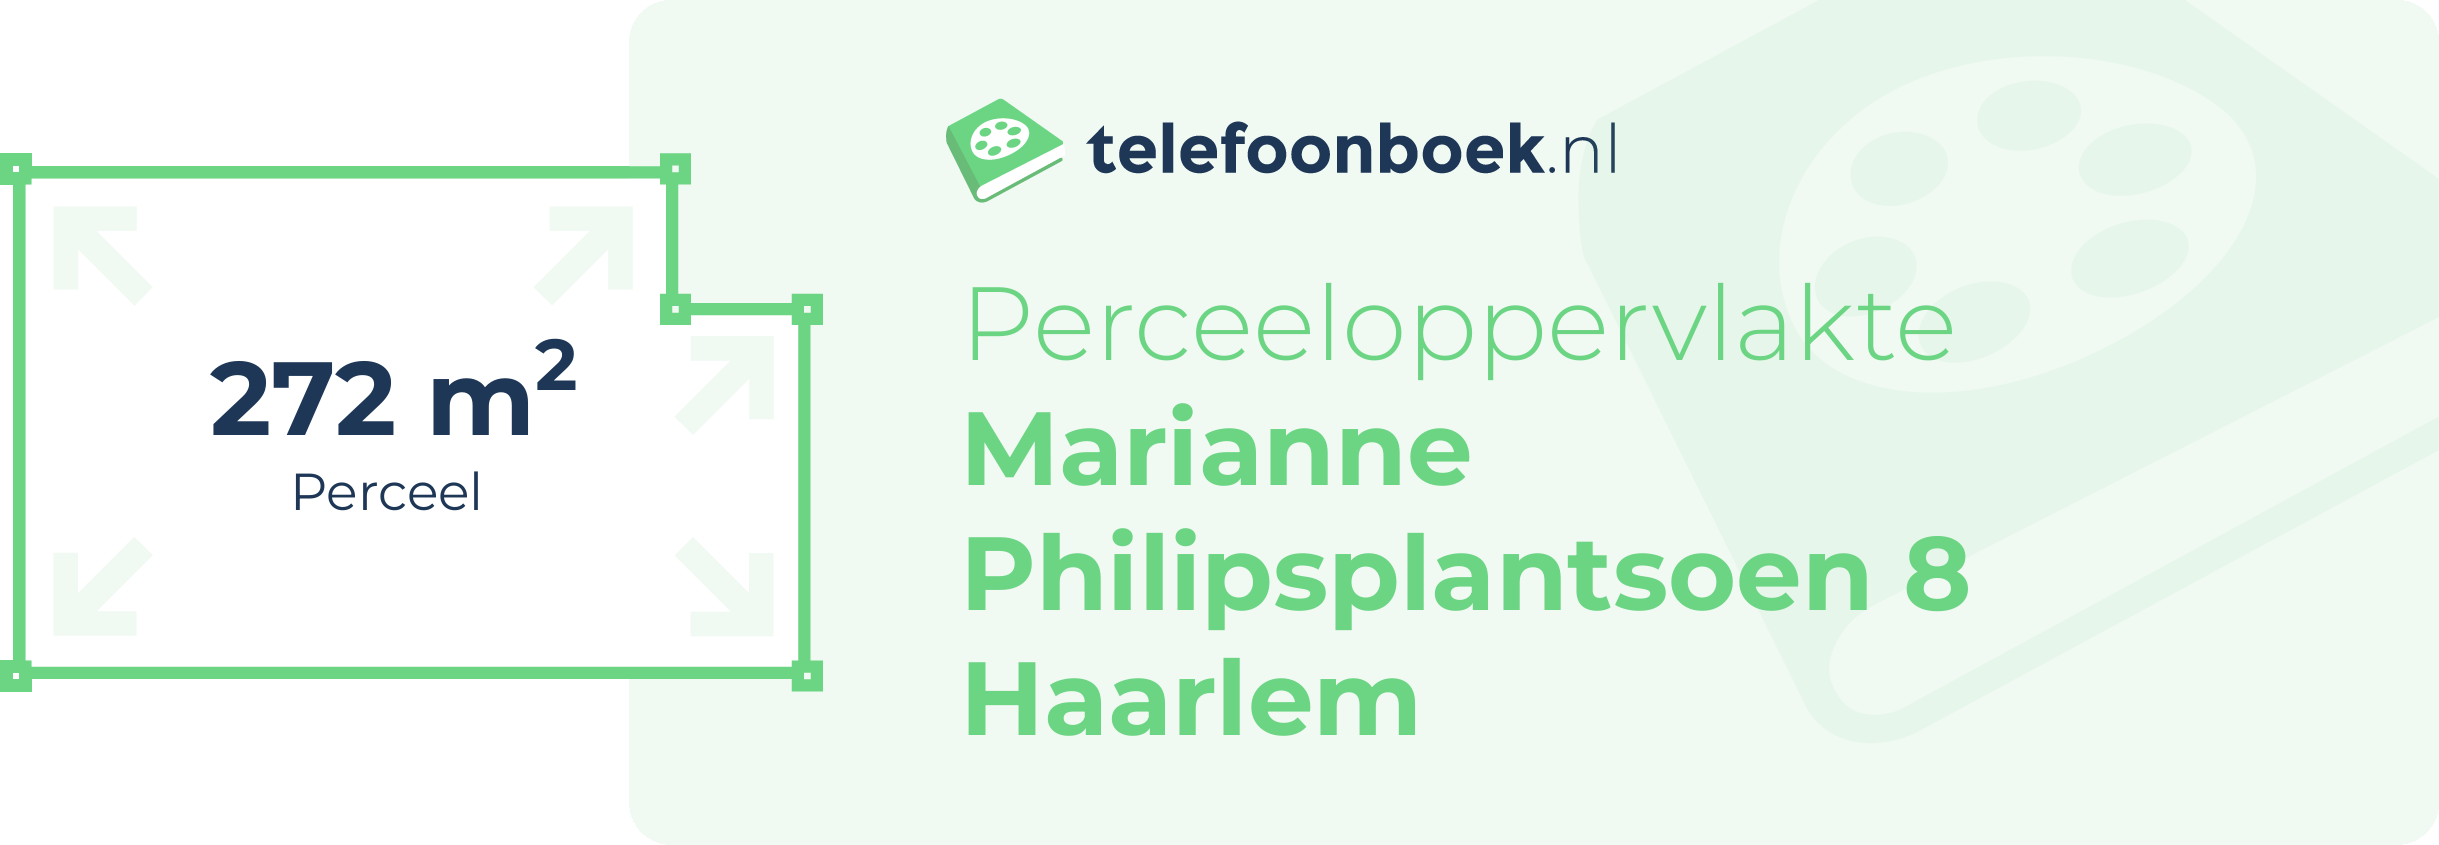 Perceeloppervlakte Marianne Philipsplantsoen 8 Haarlem